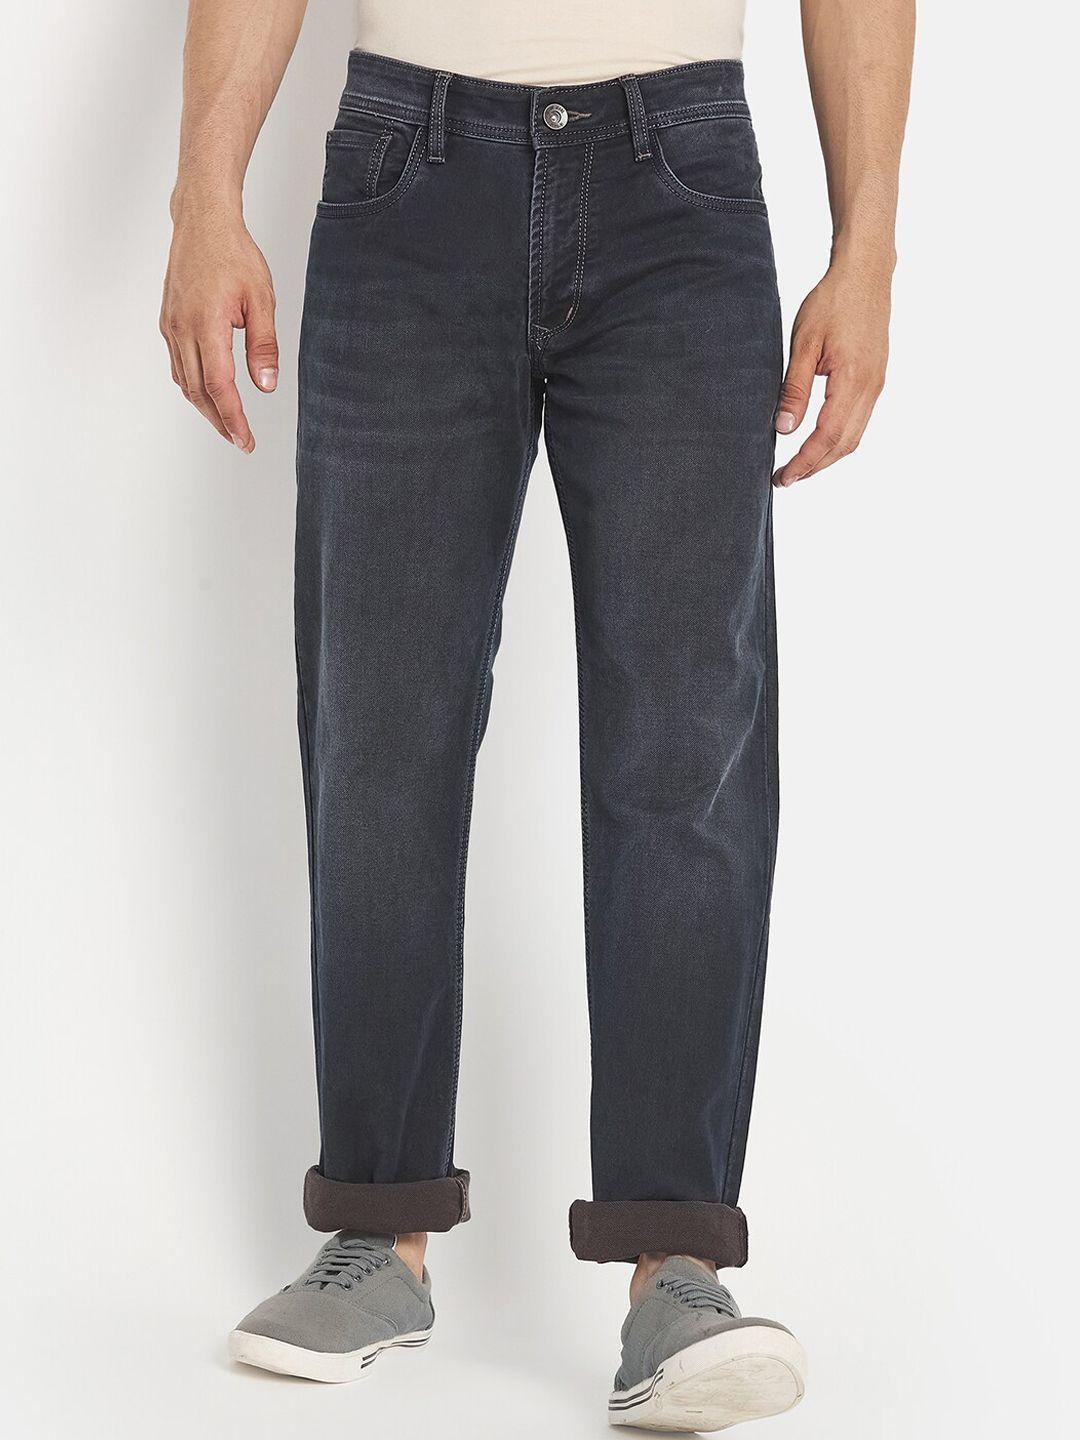 octave men grey stretchable jeans